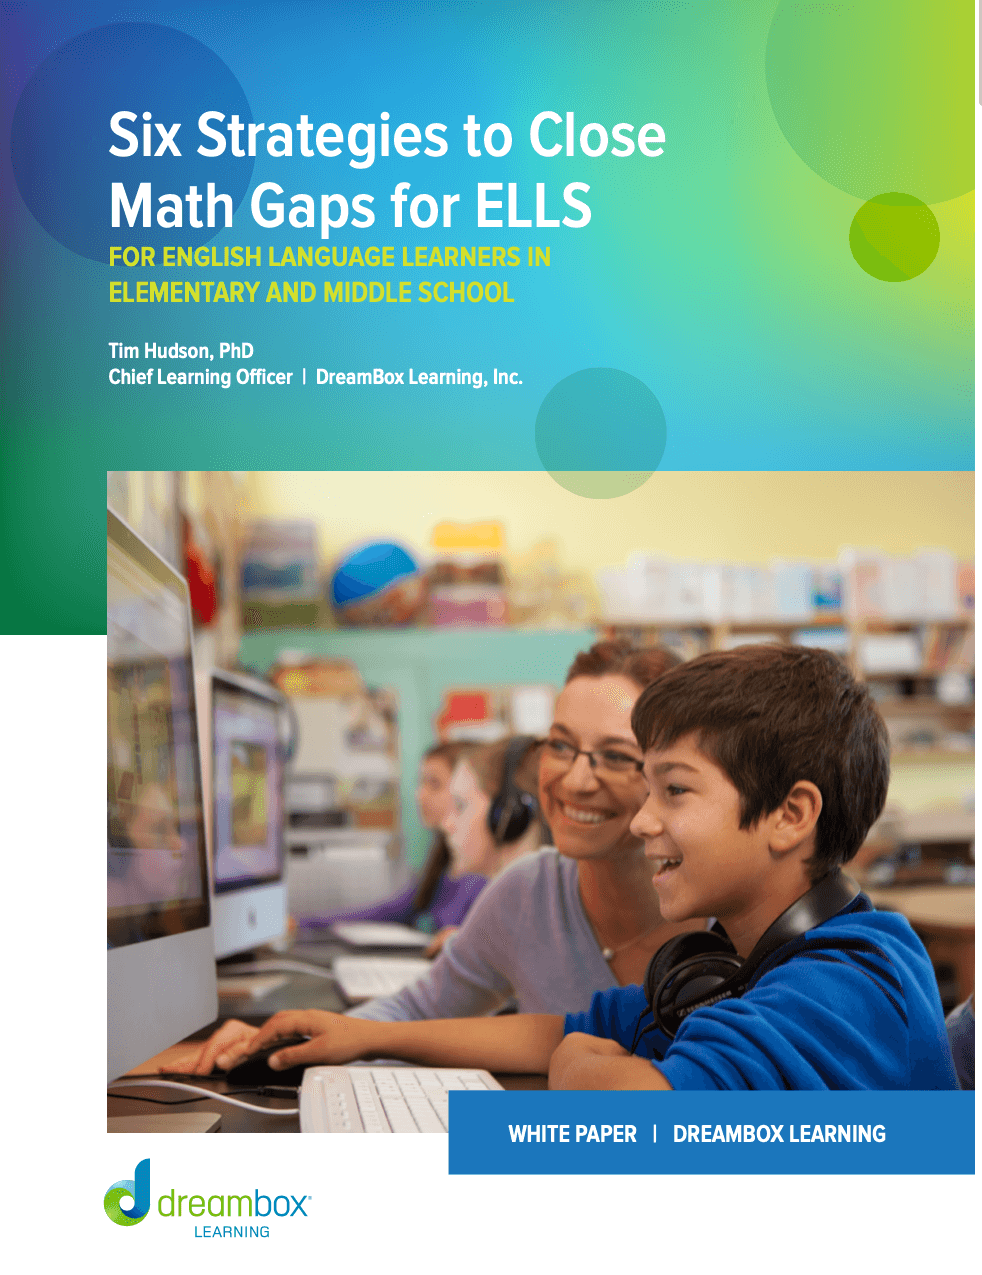 Six strategies to close math gaps for ELLs cover